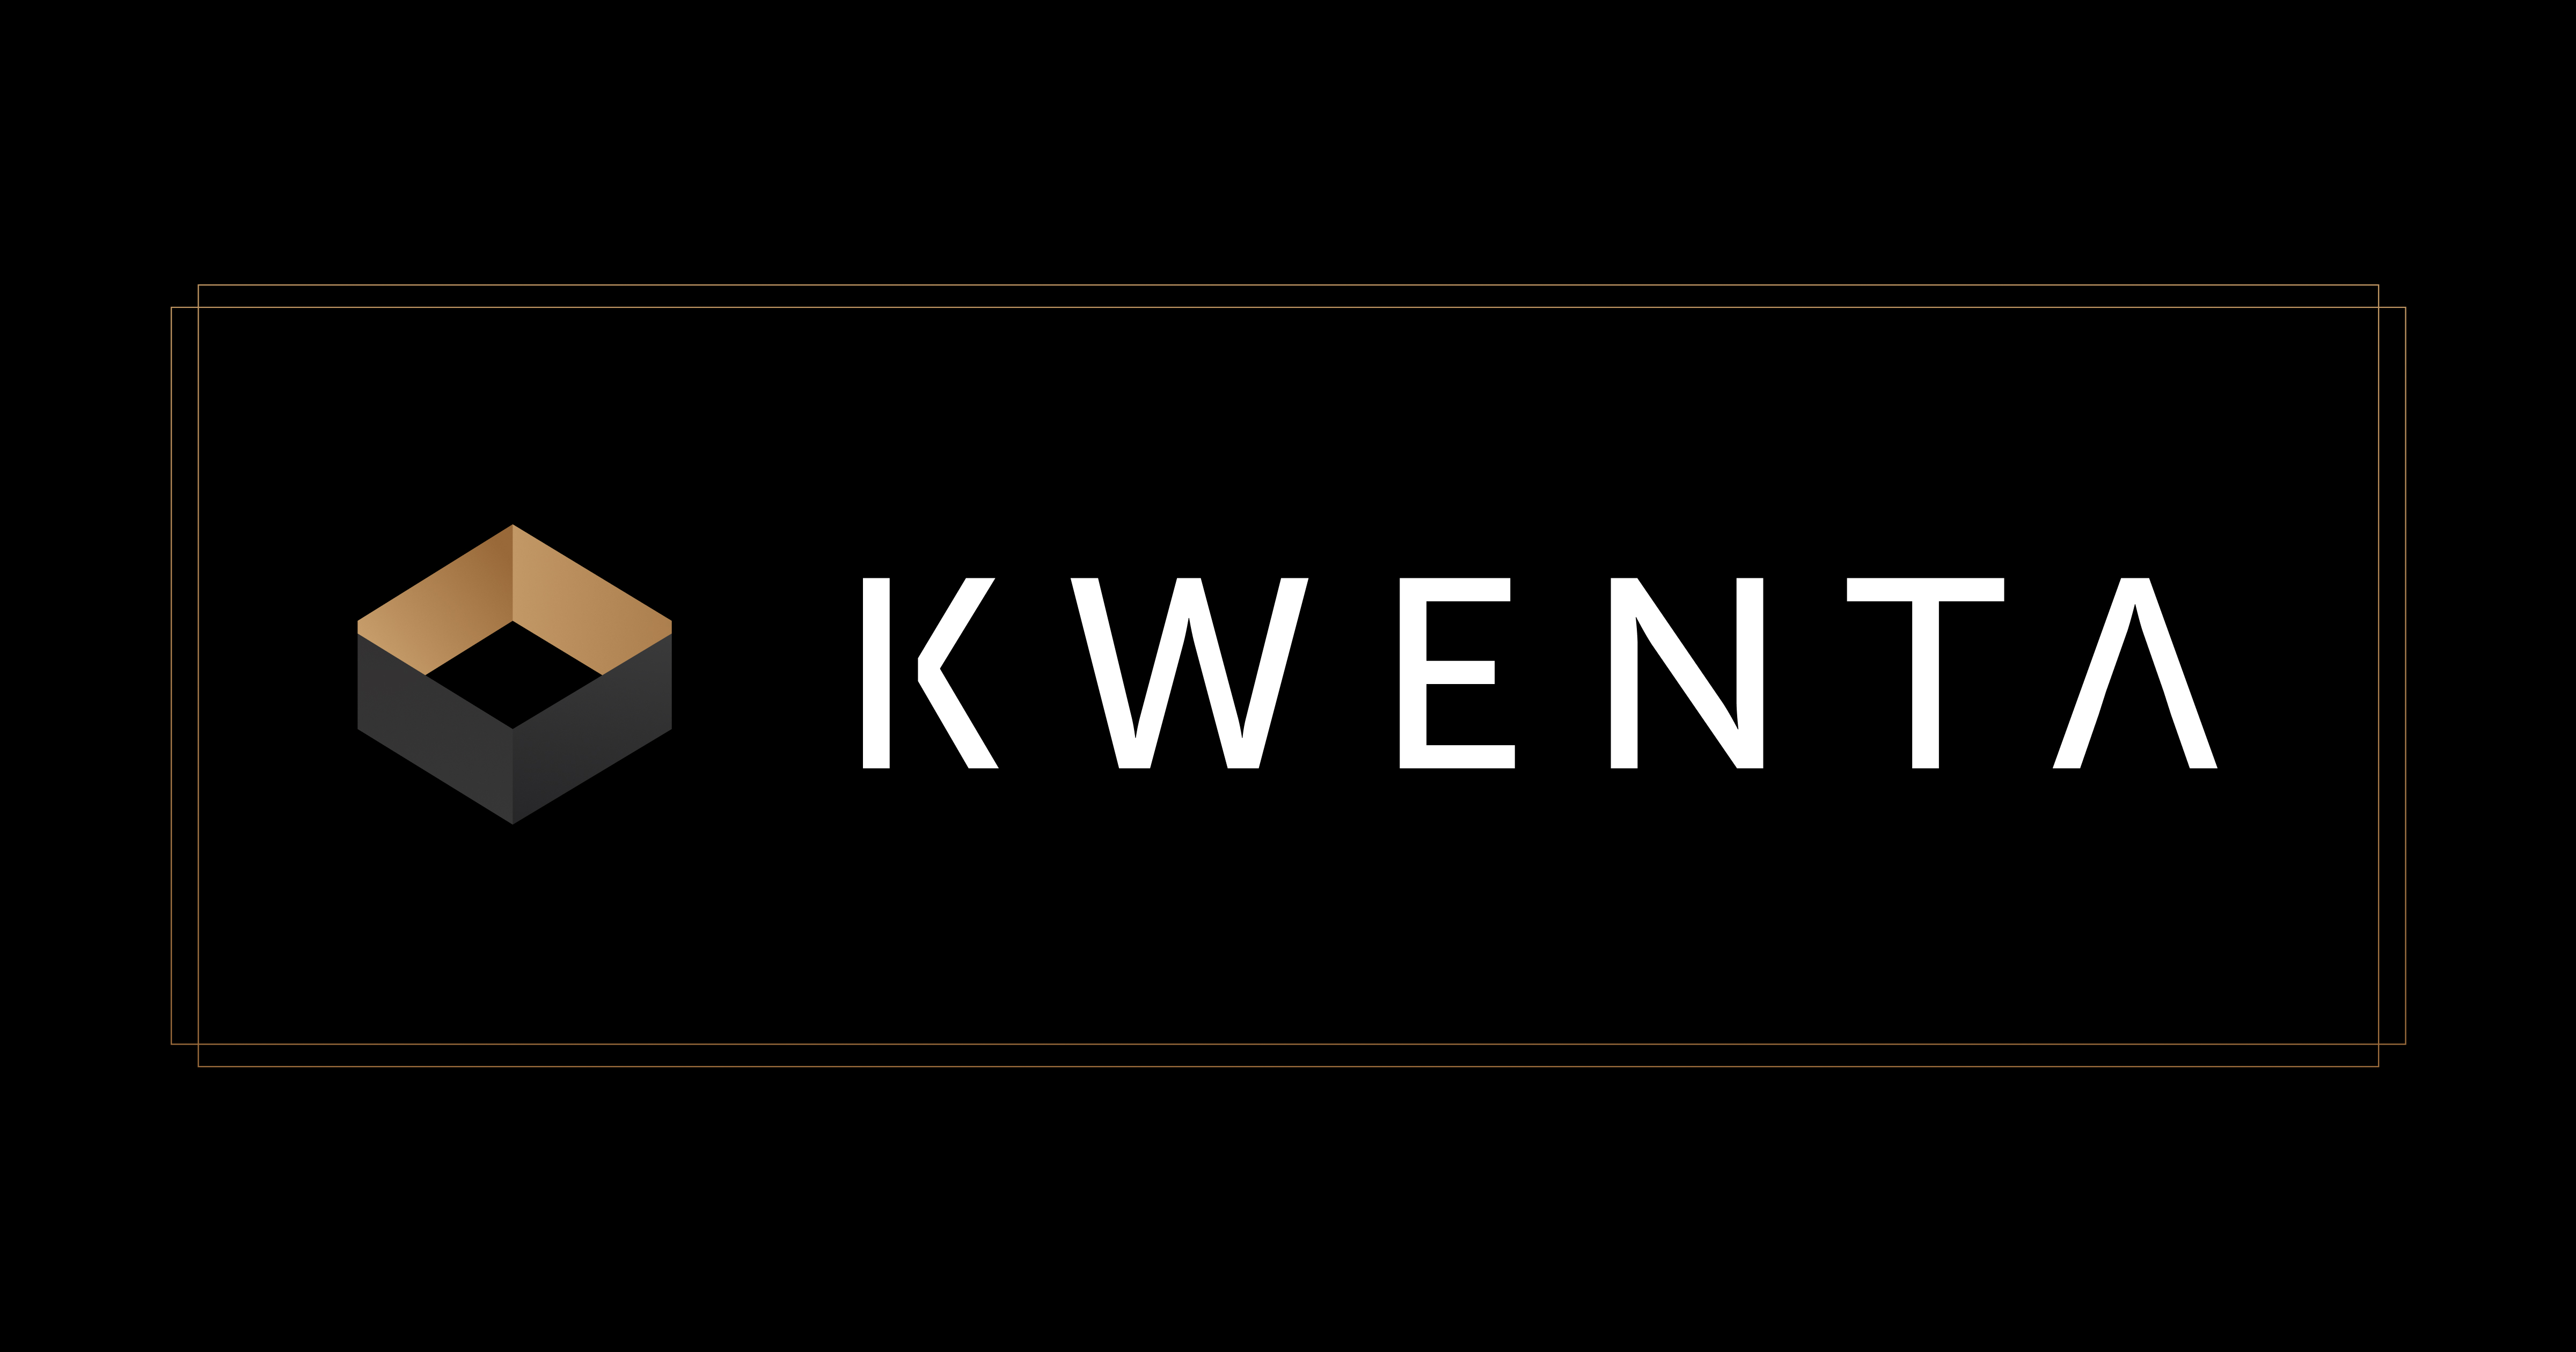 Kwenta | derivatives trading with infinite liquidity